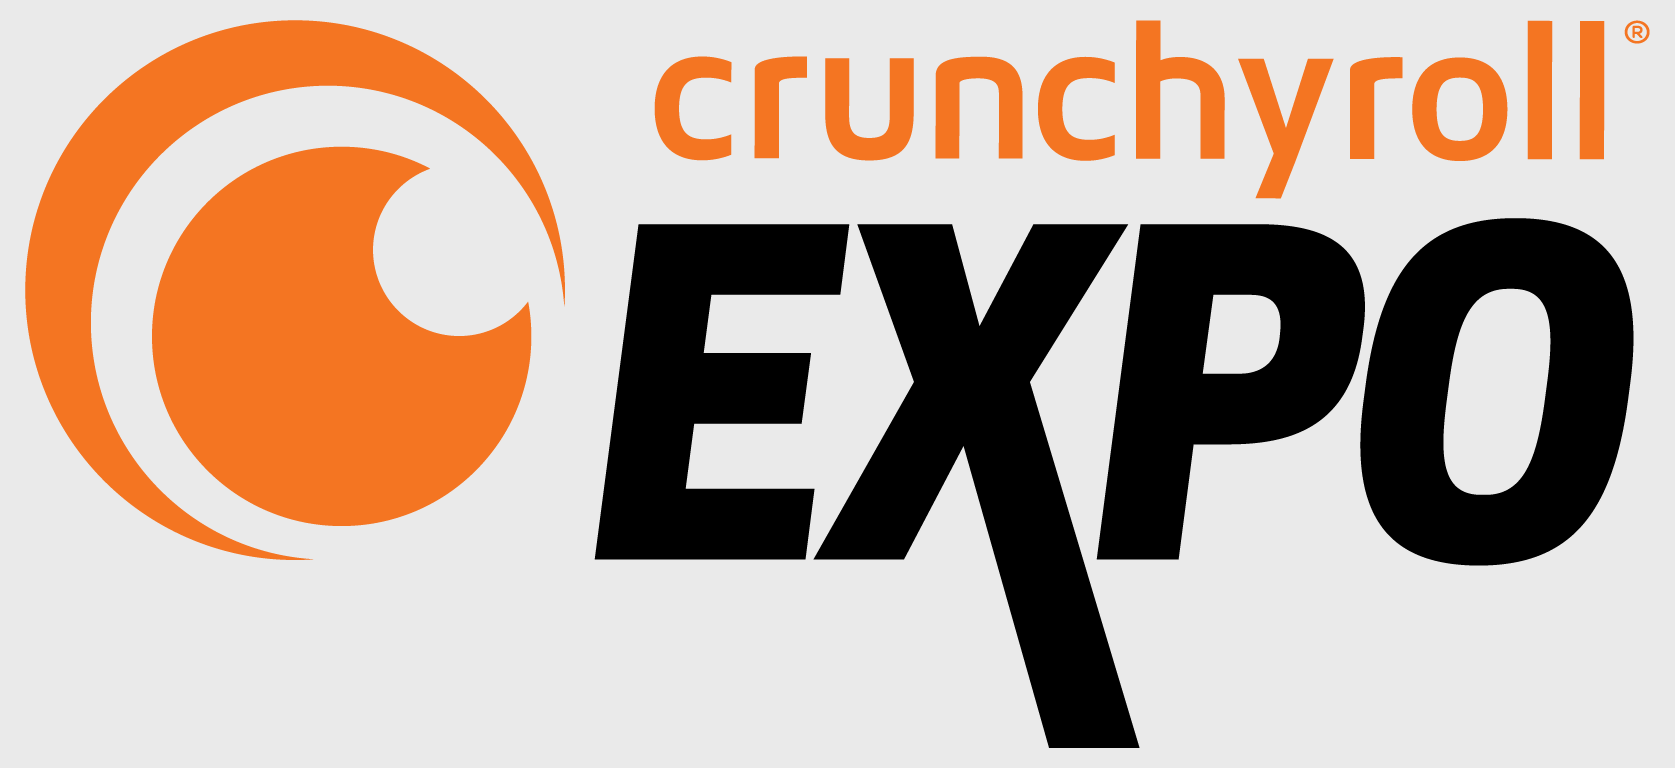 Crunchyroll Expo logo